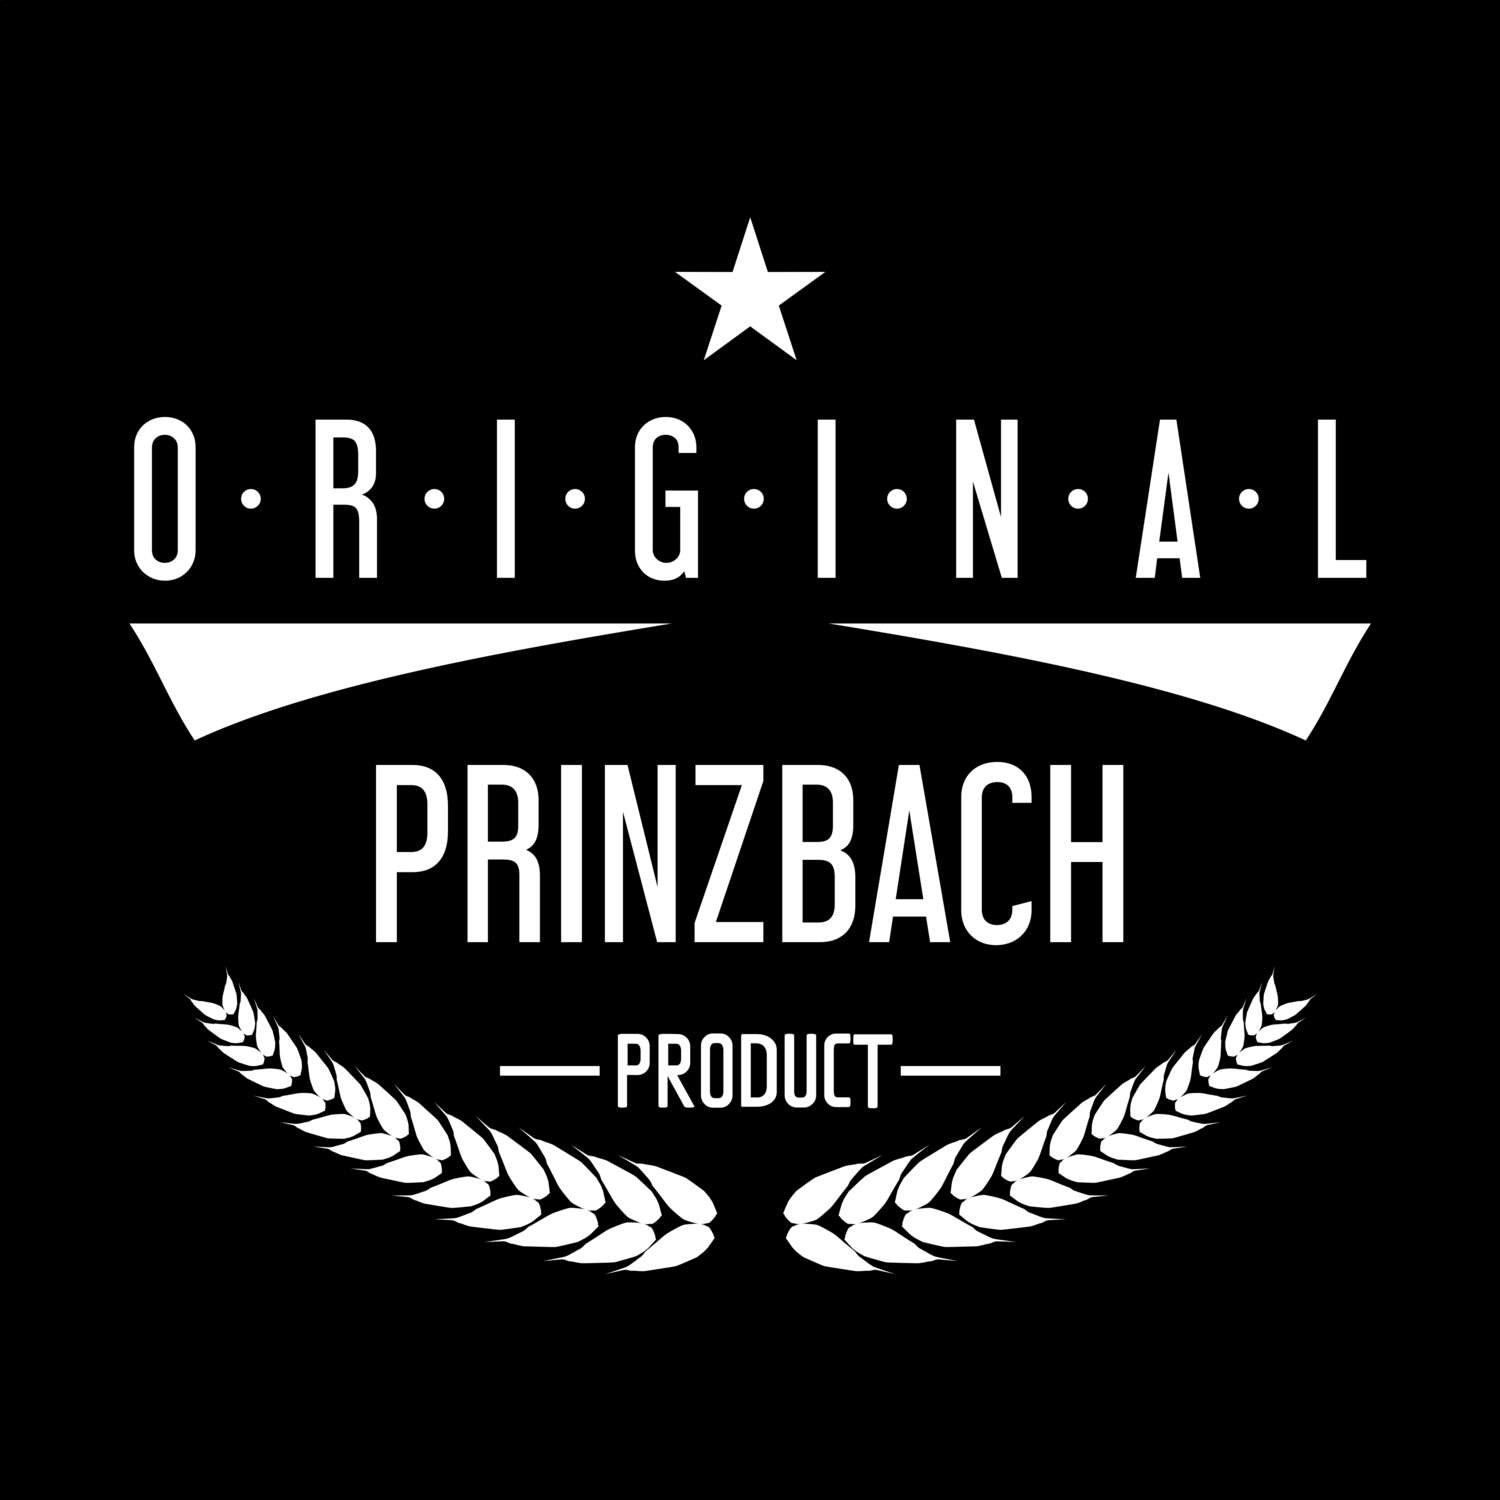 Prinzbach T-Shirt »Original Product«